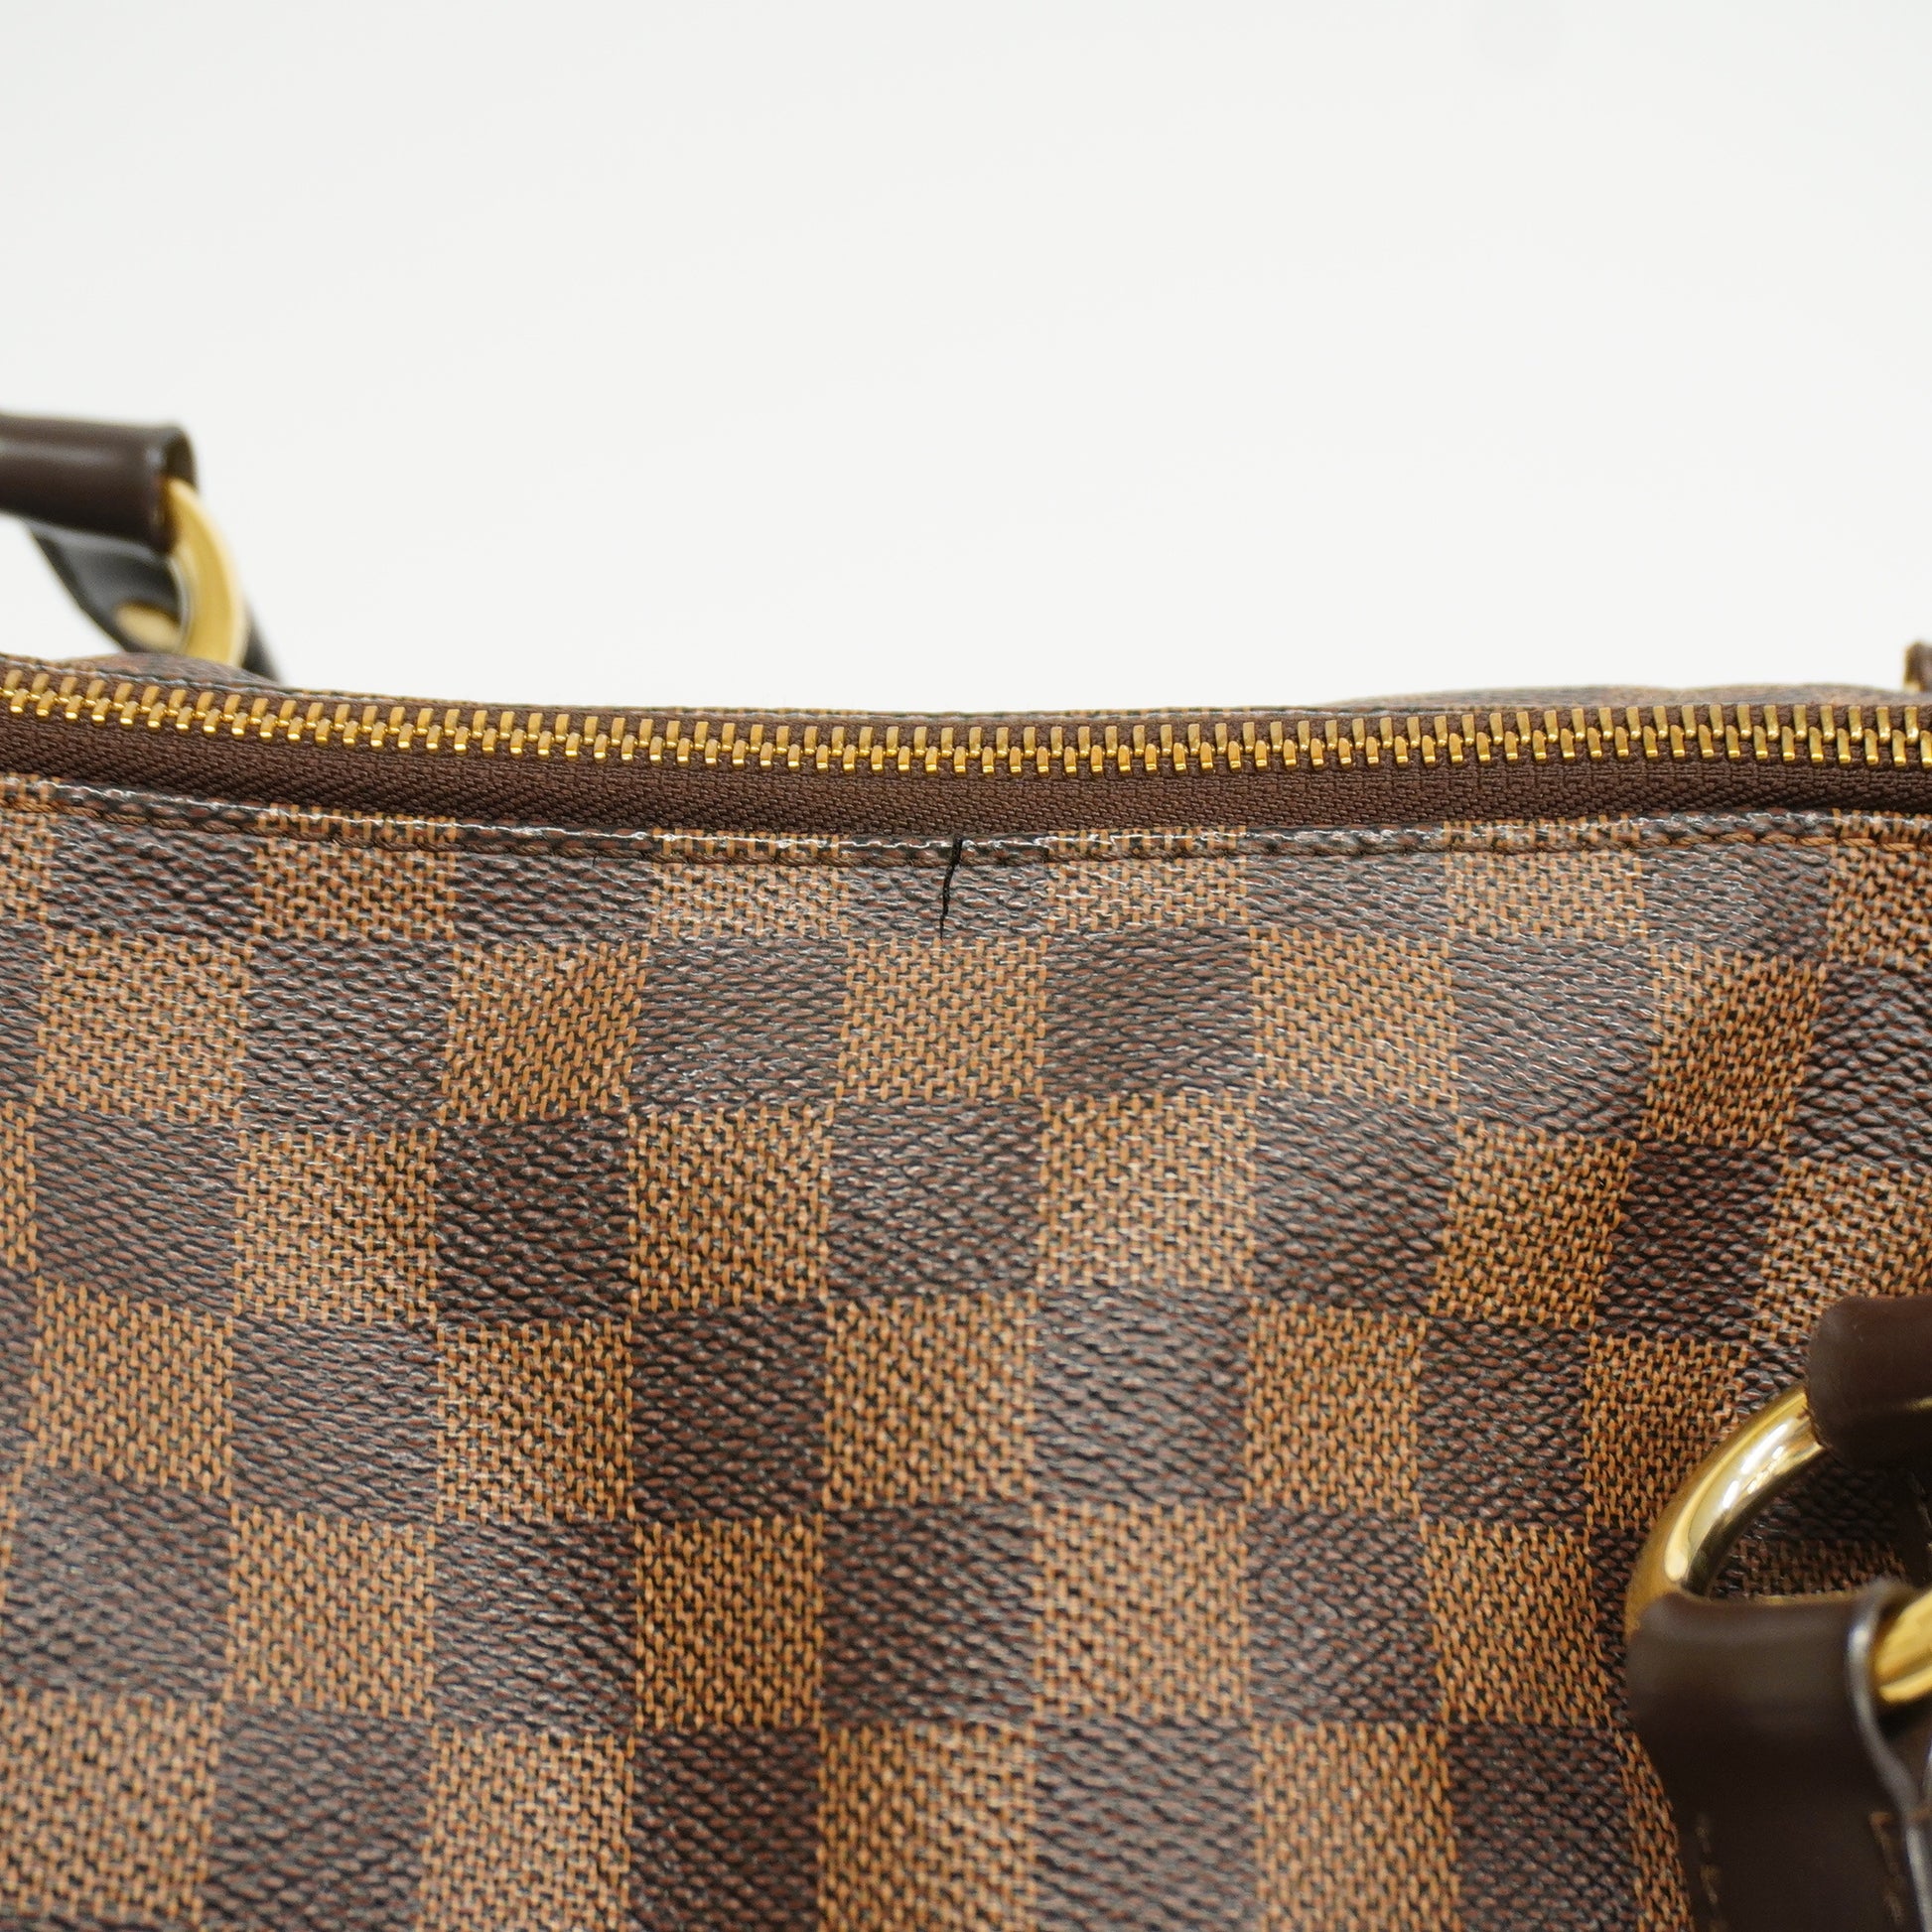 Louis Vuitton Damier 2way Bag Evora Mm N41131 Women's Handbag